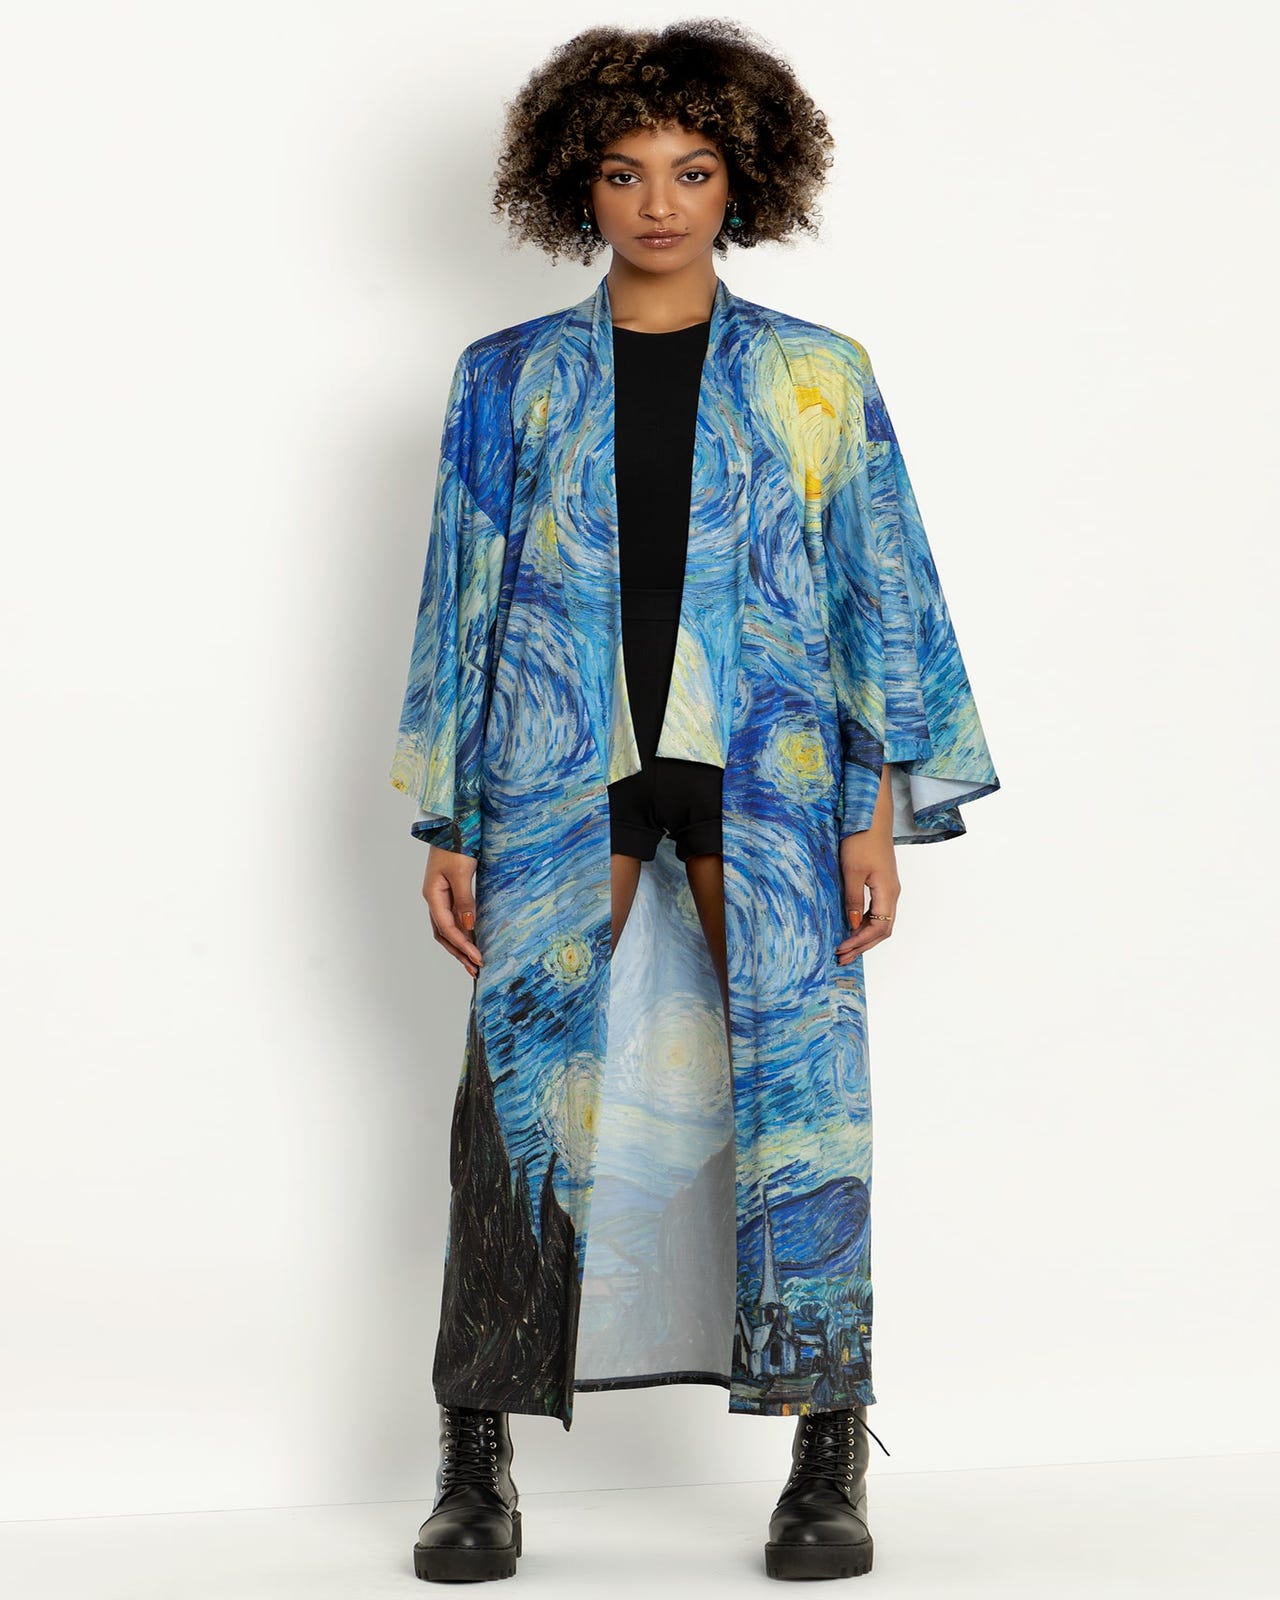 Starry Night Swan Kimono 2.0 - Limited